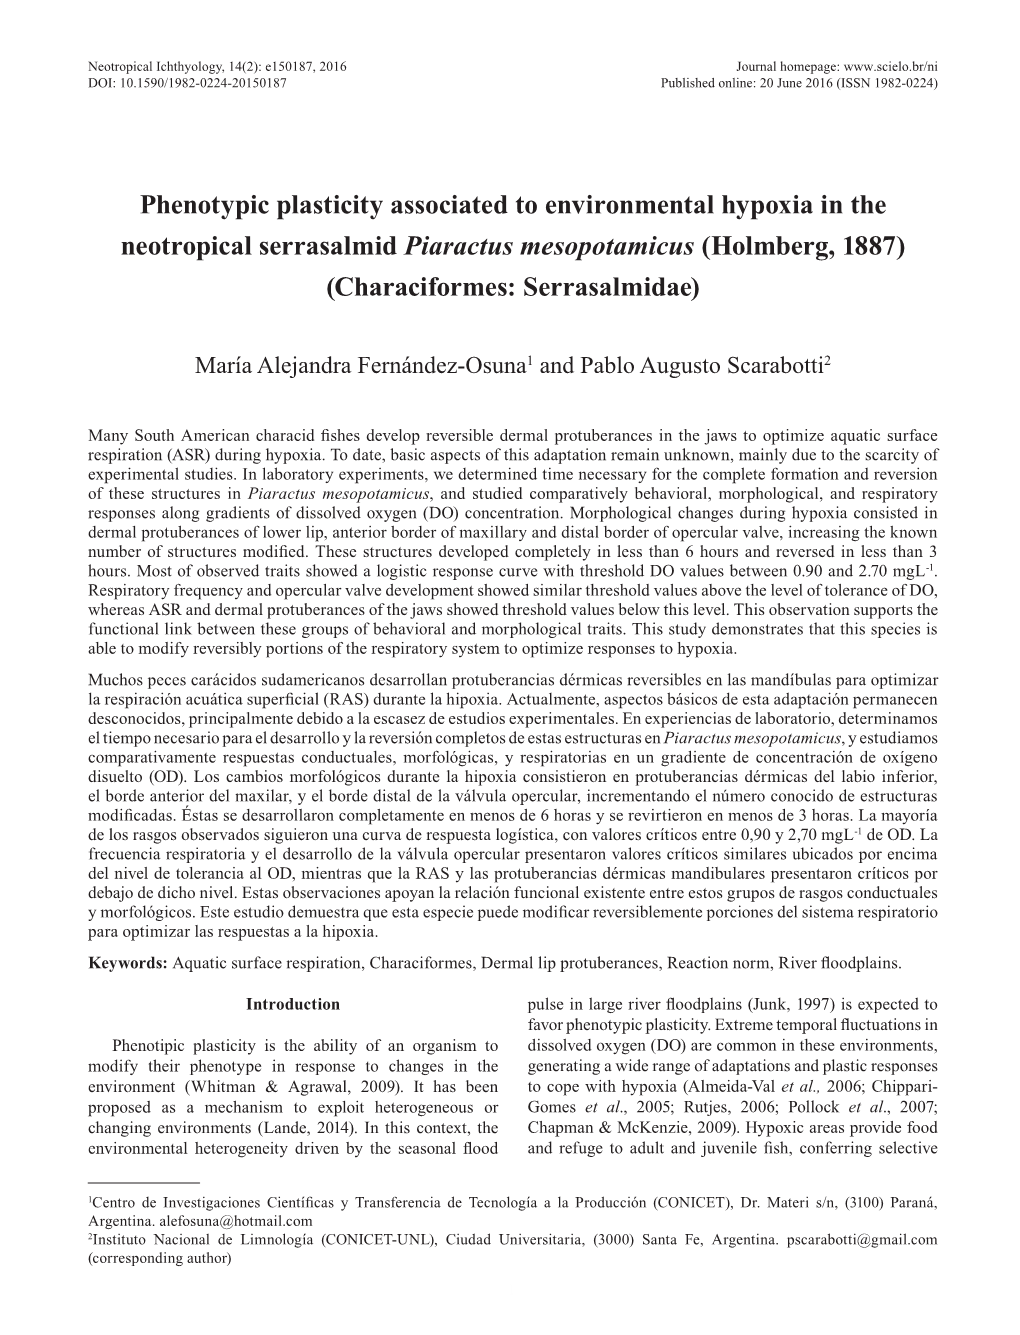 Phenotypic Plasticity Associated to Environmental Hypoxia in the Neotropical Serrasalmid Piaractus Mesopotamicus (Holmberg, 1887) (Characiformes: Serrasalmidae)